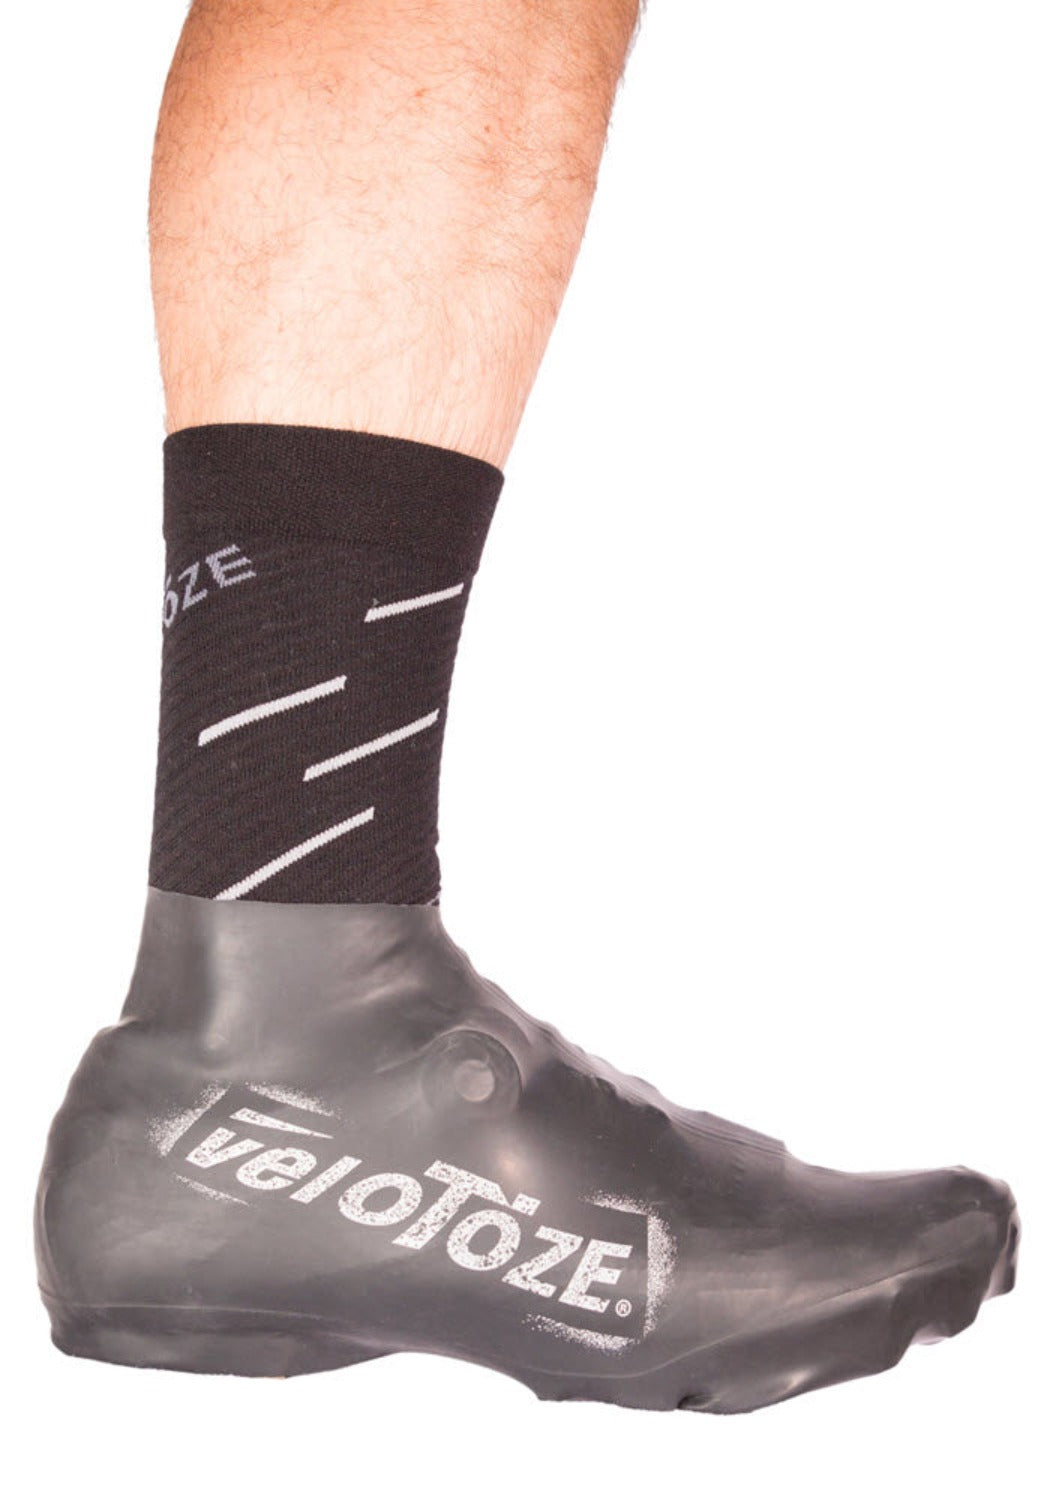 veloToze Short MTB Shoe Covers